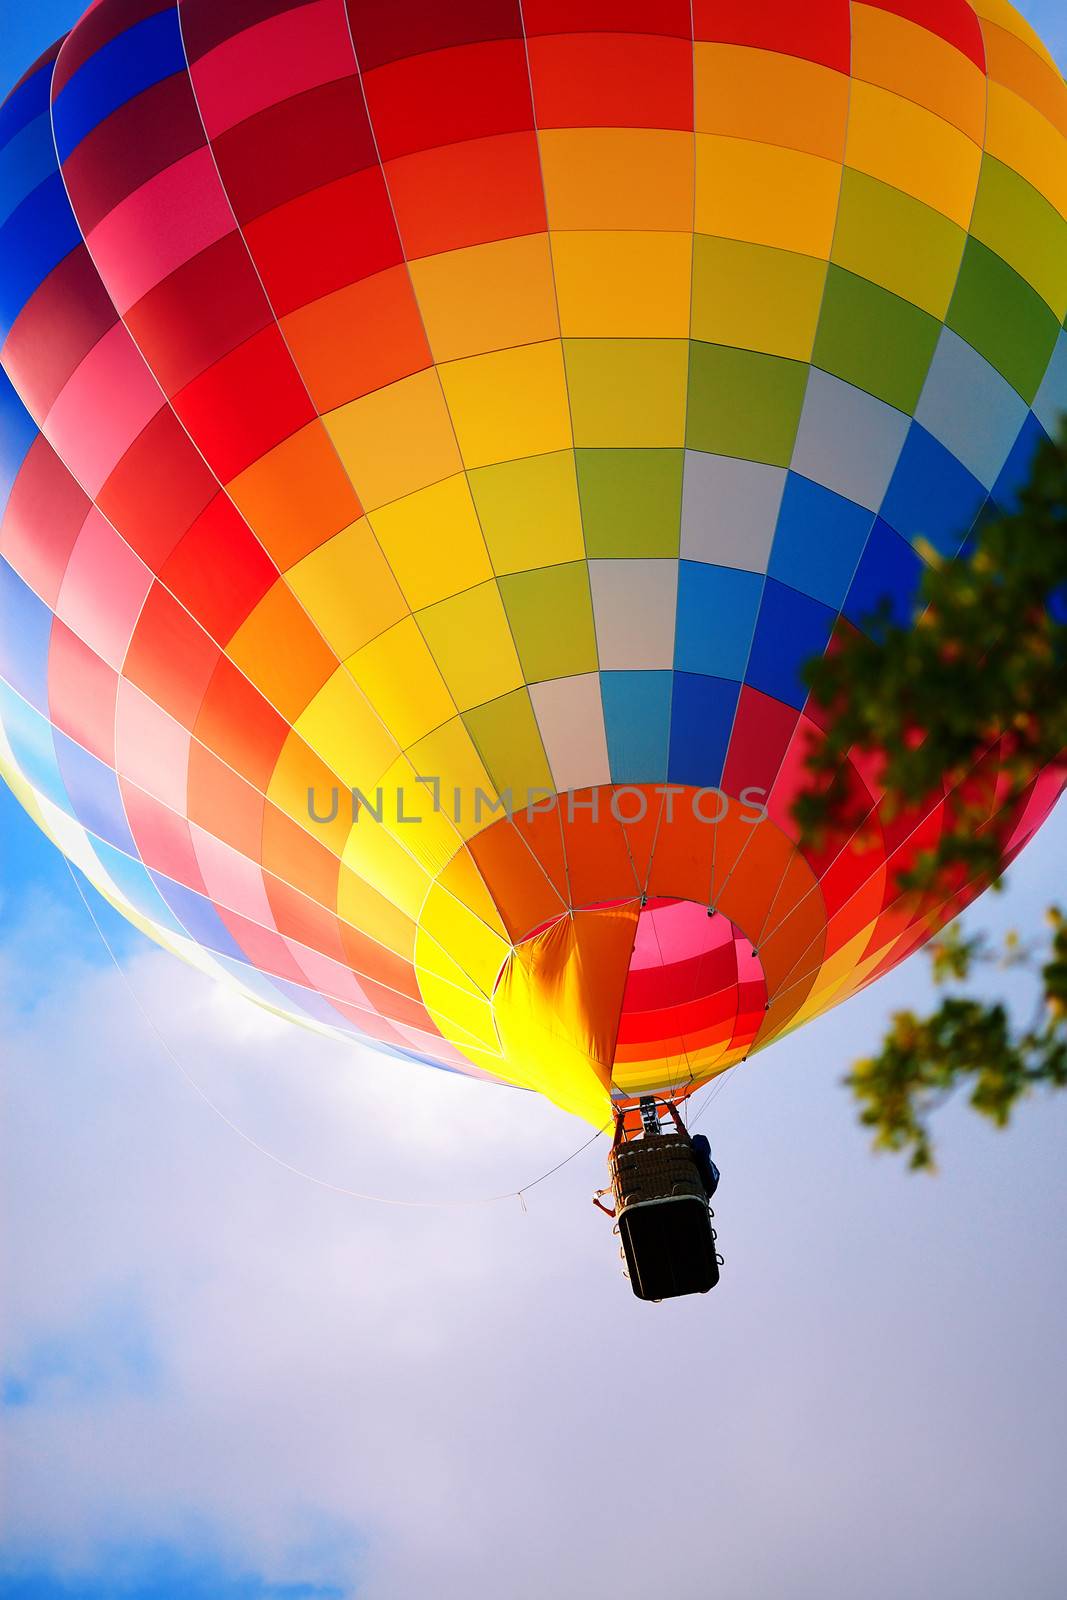 Raznouvetny balloon in clouds. Balloon in the sky. Flight by a balloon.